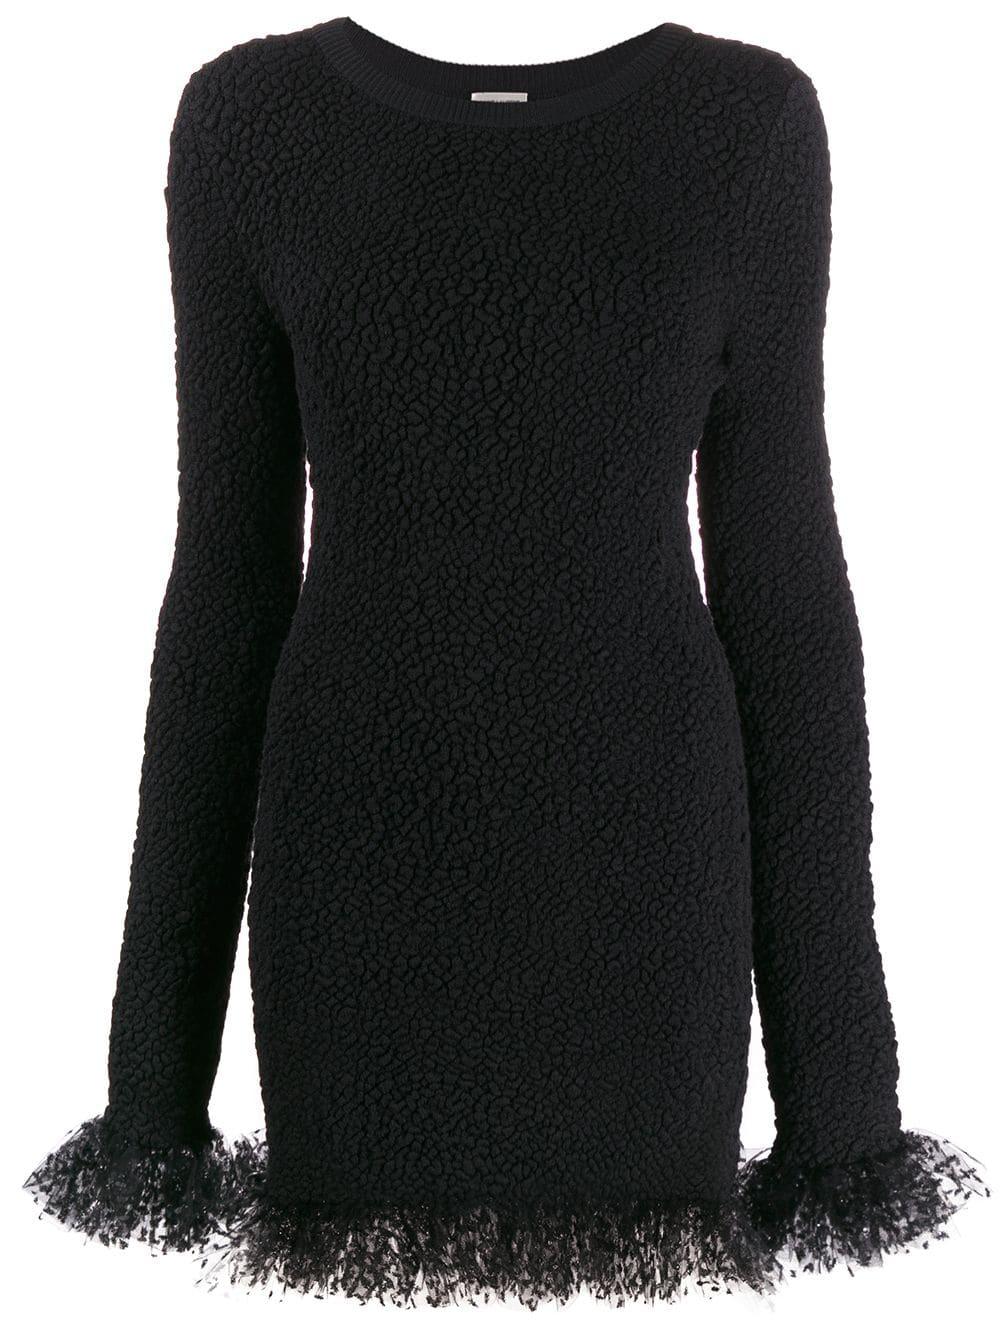 Yves Saint Laurent Knit & Tulle Mini Dress, Fall-Winter 1988 For Sale 6